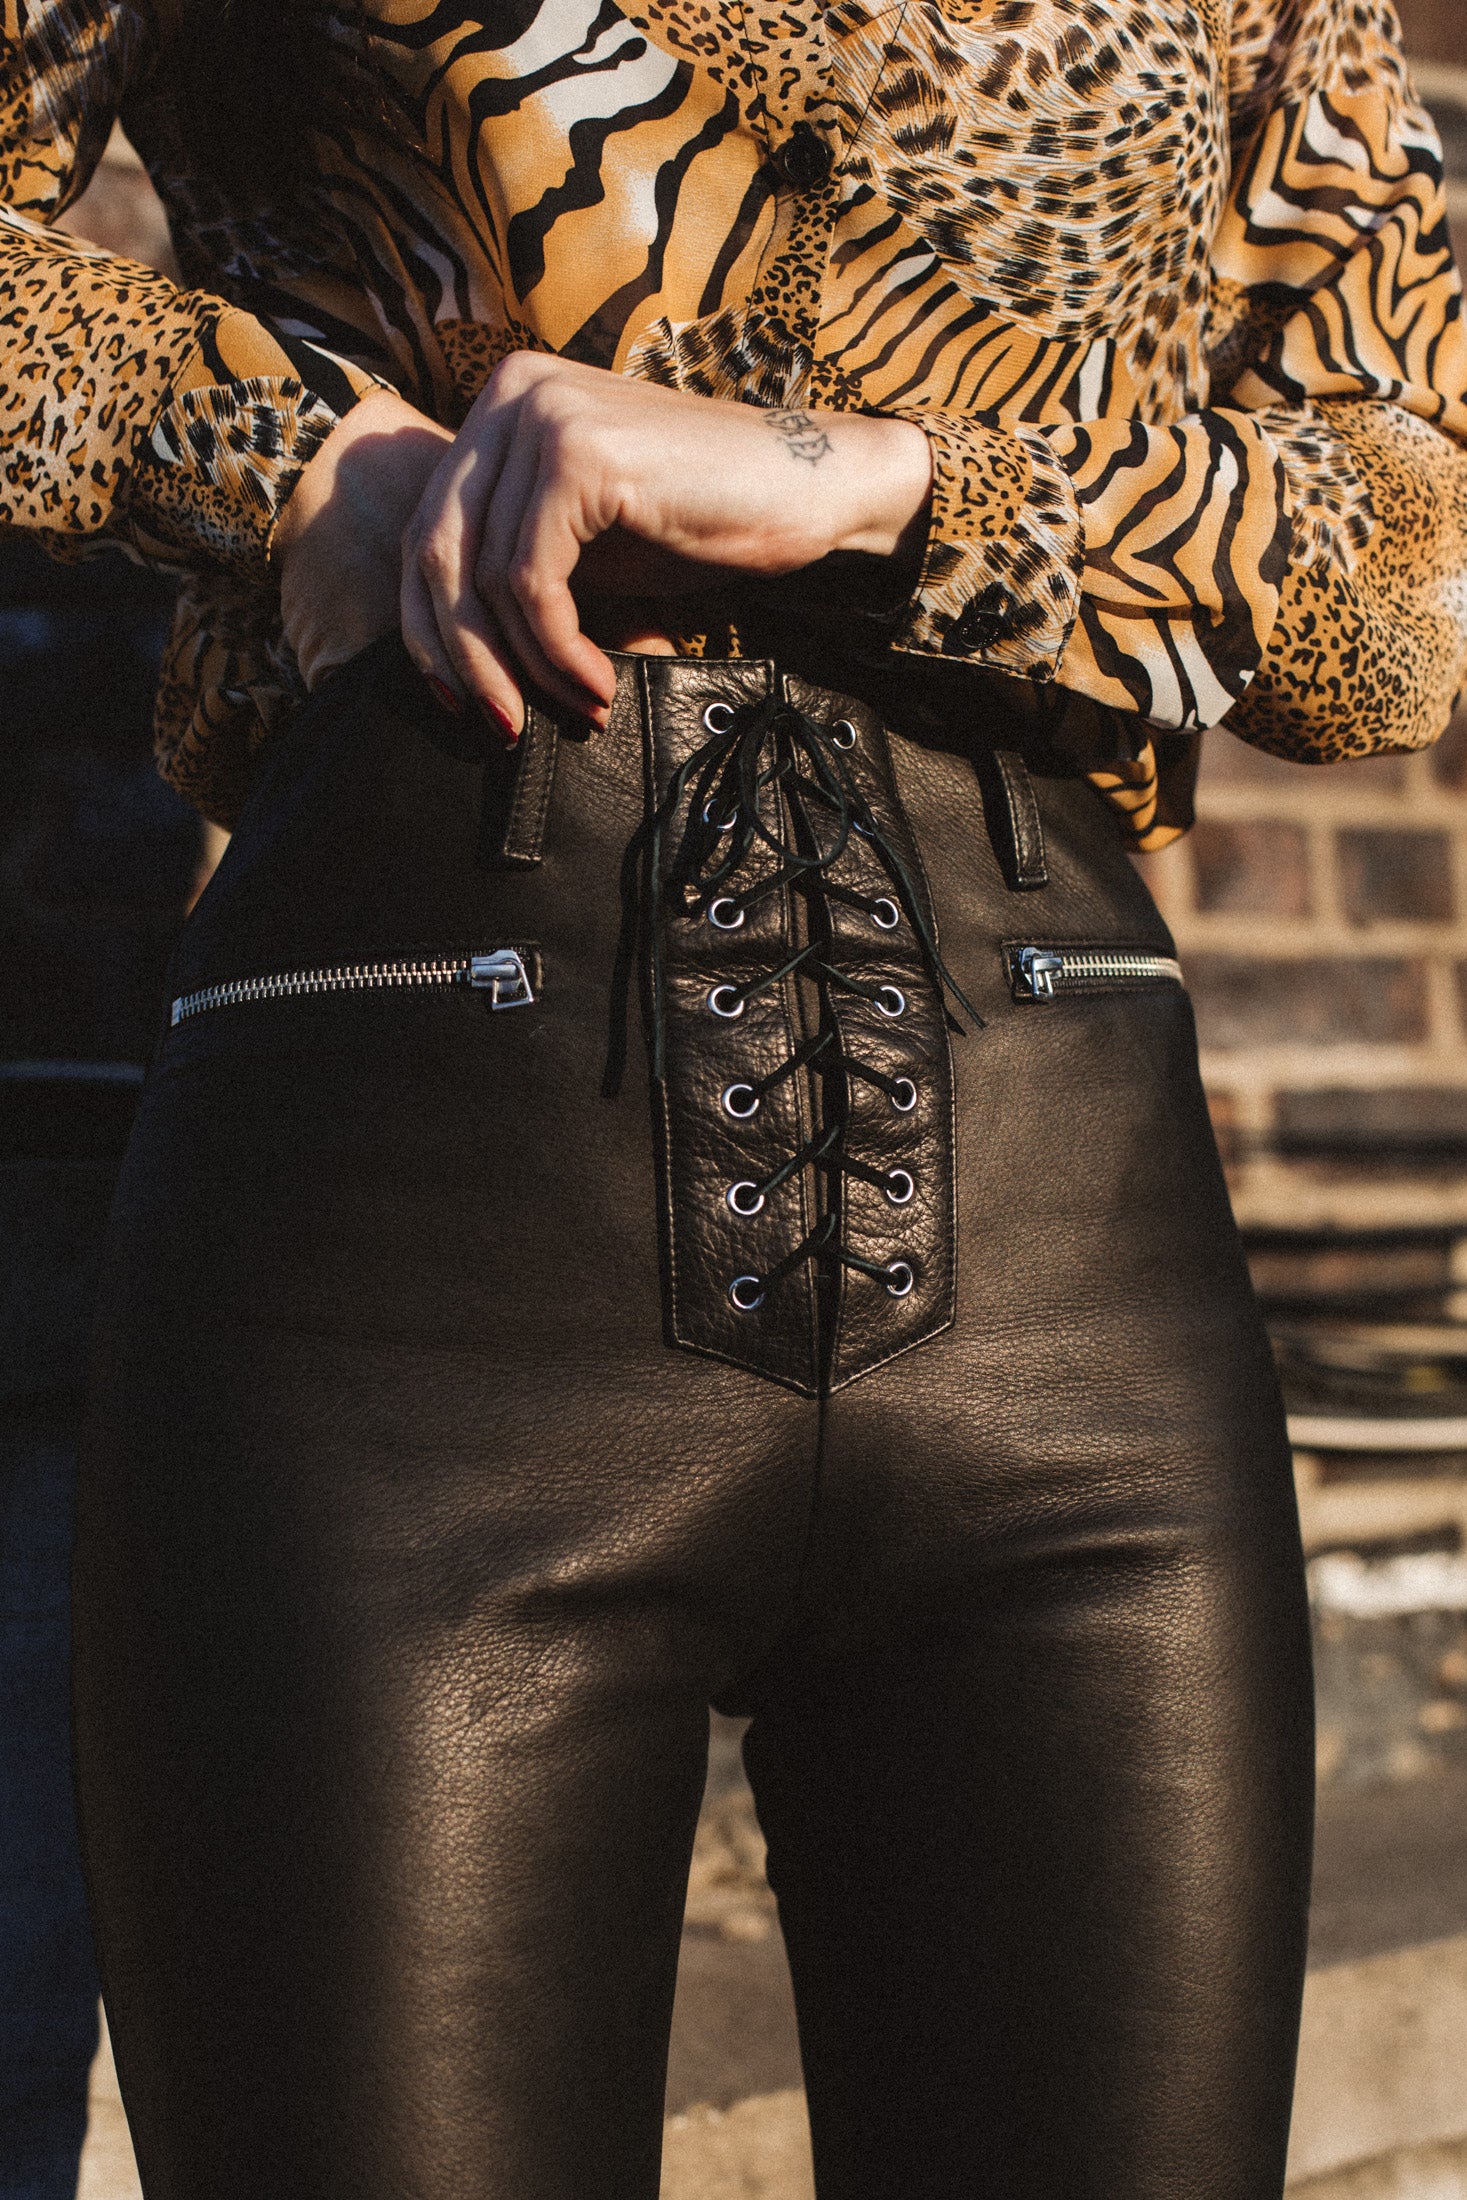 carmen langdon recommends Black Tight Leather Pants